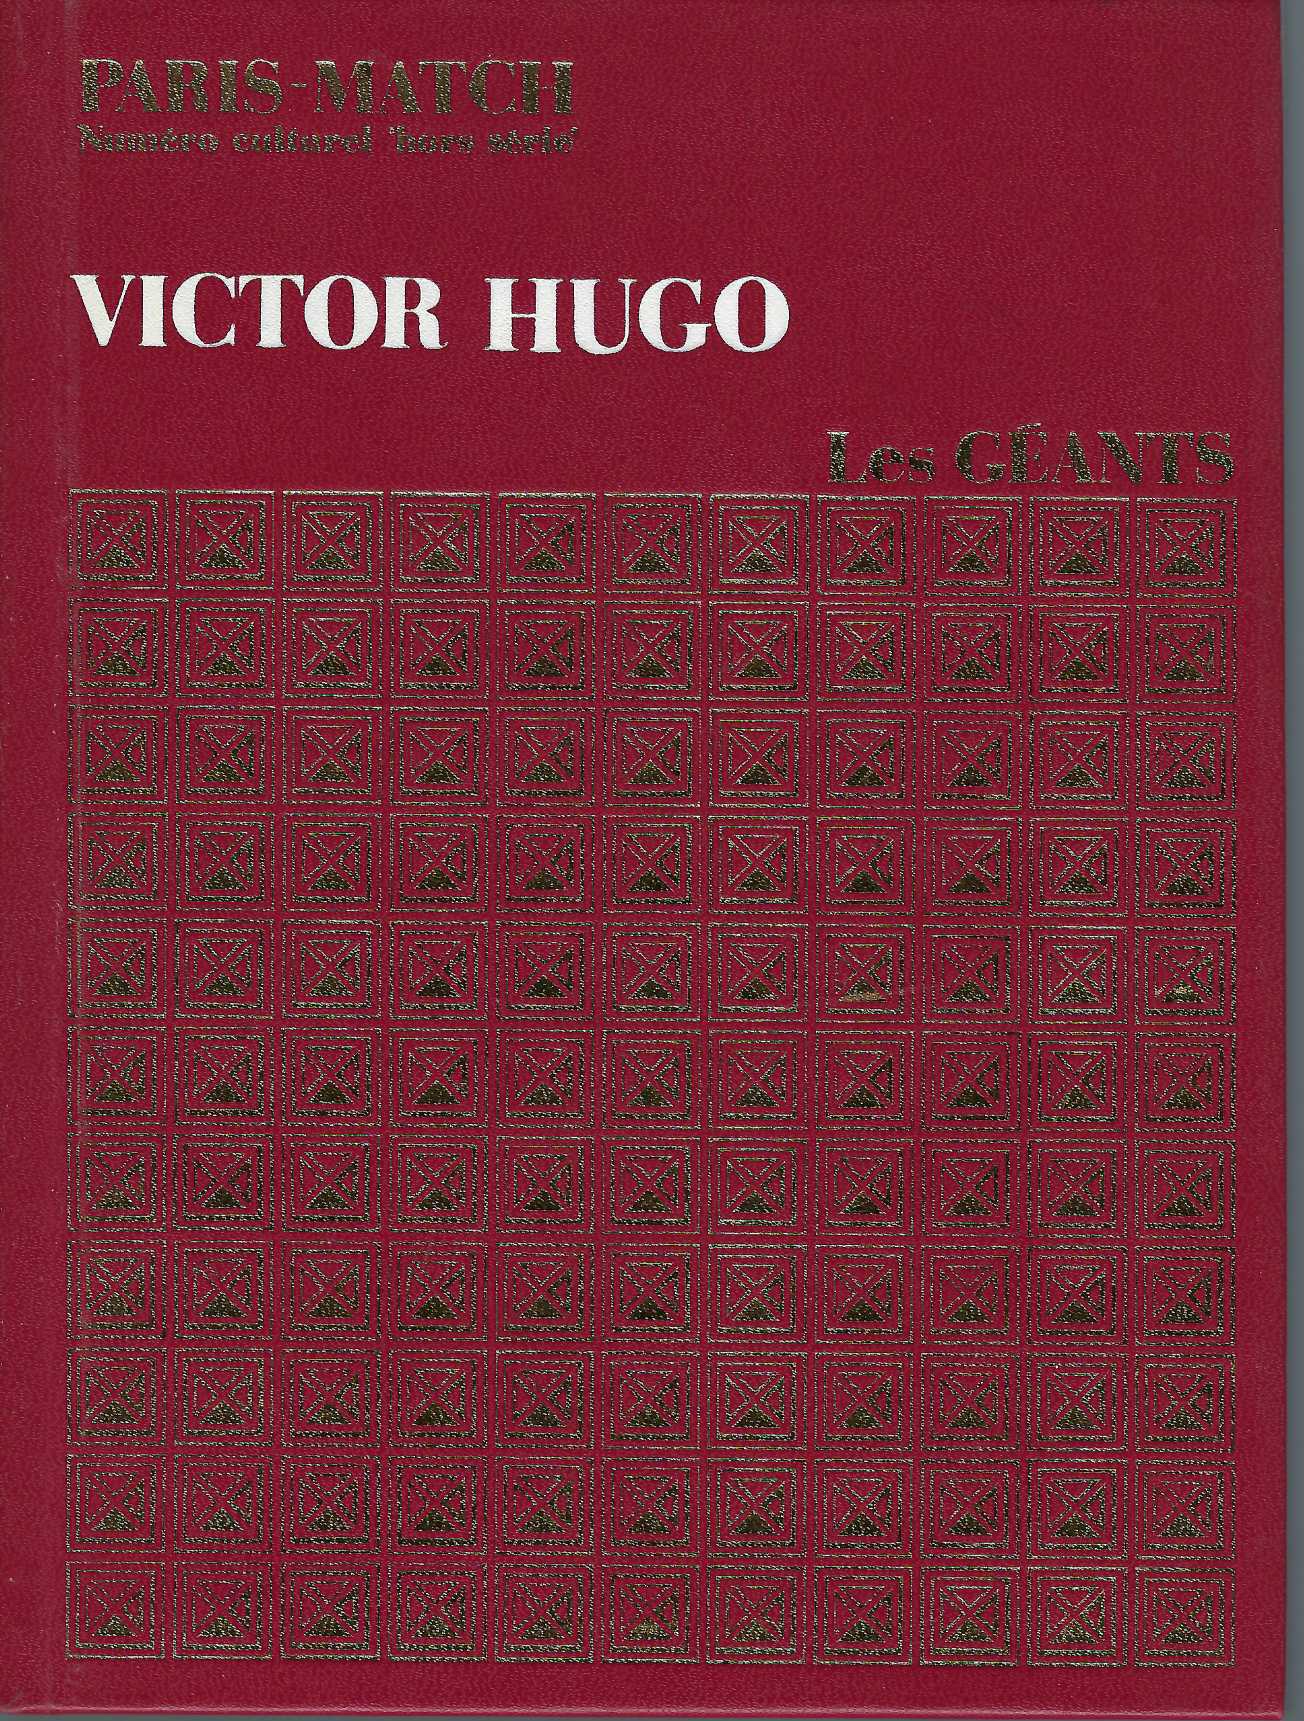 HUGO VICTOR - Victor Hugo - Collection Les Gants - Paris-Match Numro Culturel Hors Srie 1970